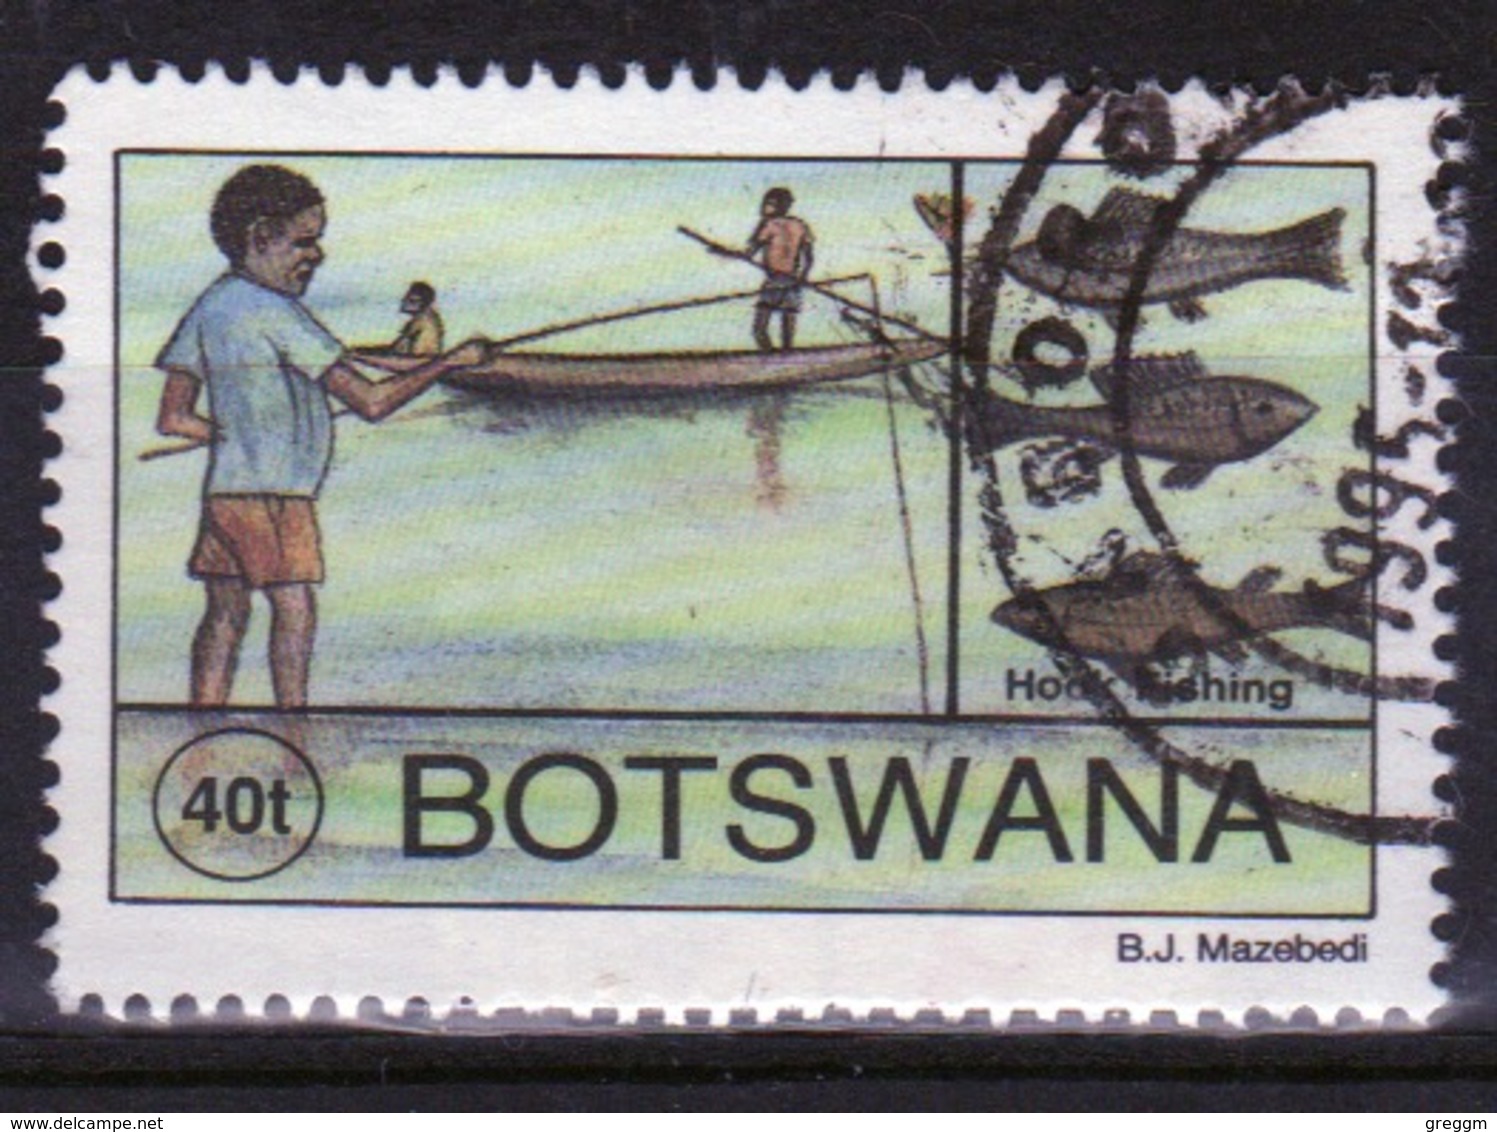 Botswana 1995 Single 40t Commemorative Stamp From The Traditional Fishing Set. - Botswana (1966-...)